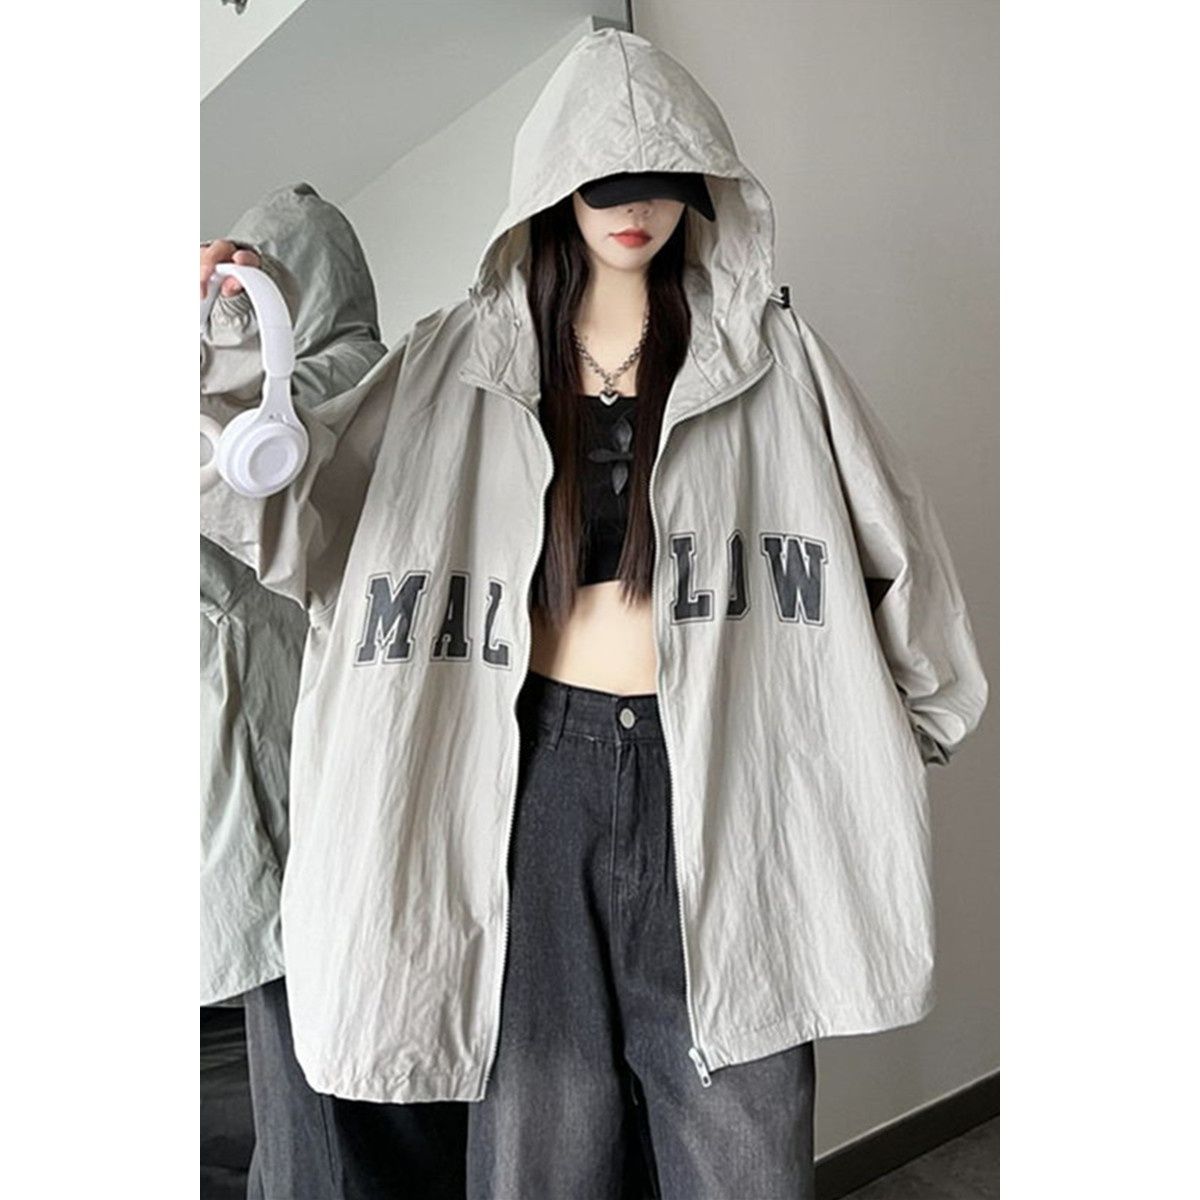 Sunscreen jacket female 2023 summer new Korean style hooded cardigan sunscreen clothing casual loose thin windbreaker trend